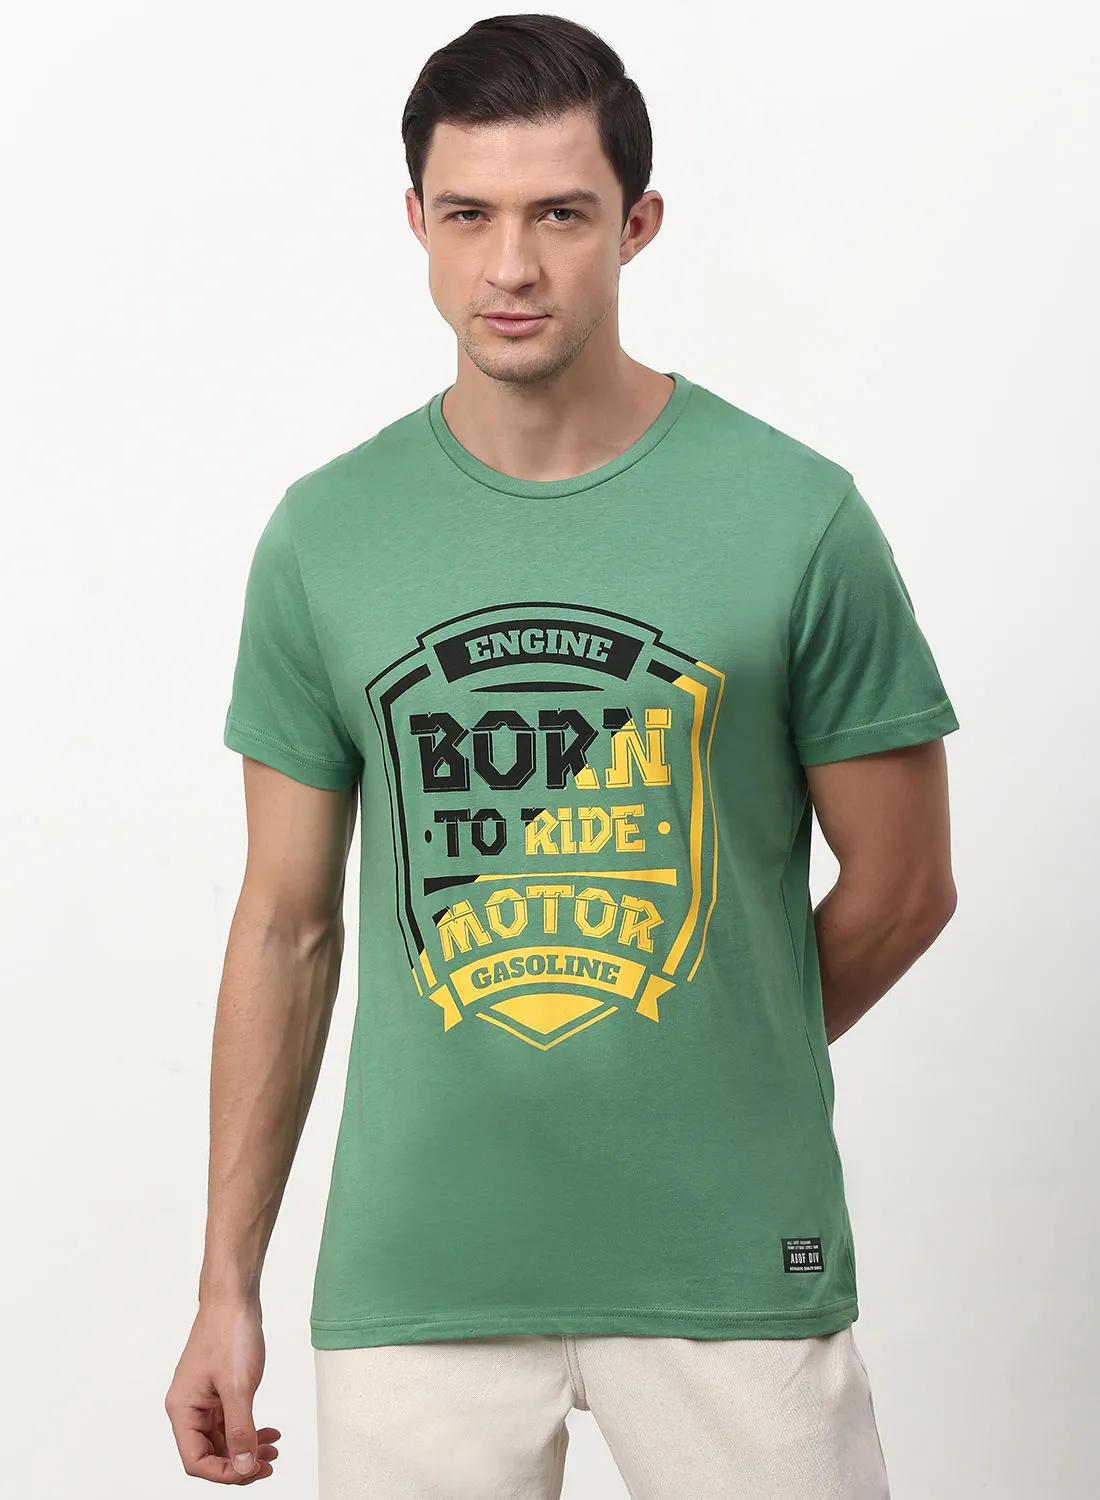 ABOF Bron To Ride Motor Printed Crew Neck T-Shirt Dark Fern Green